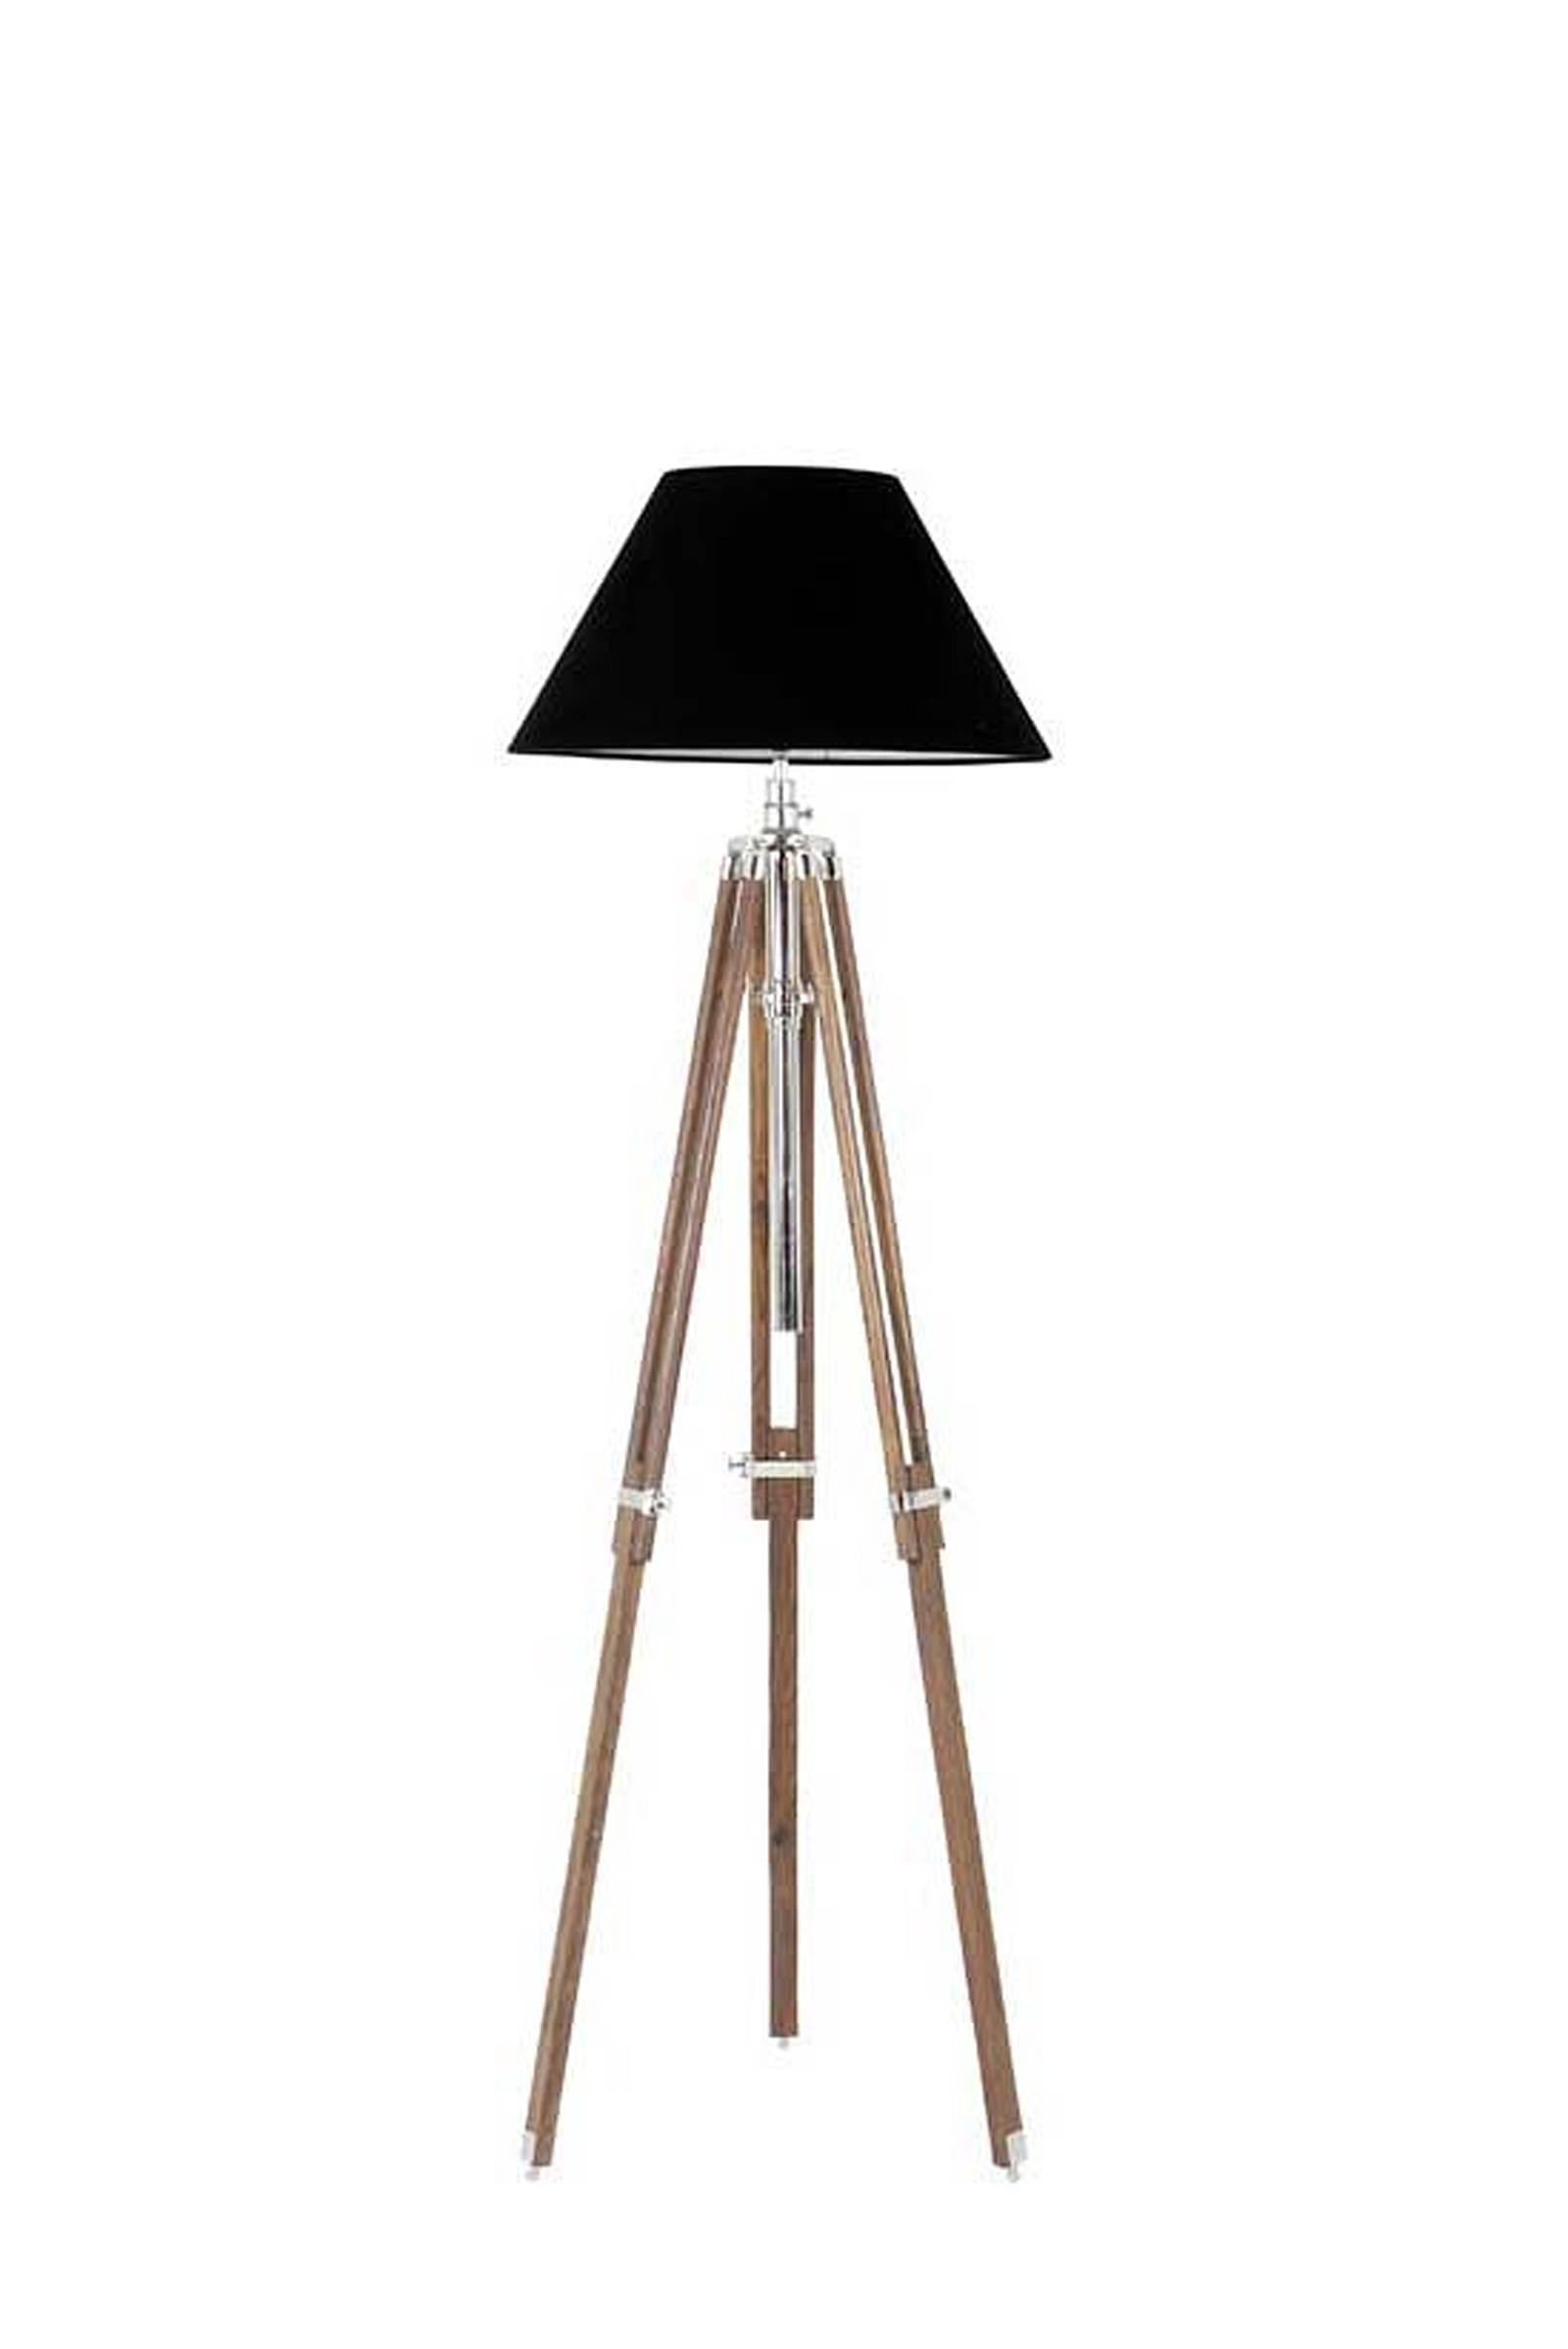 Dutch Tripod Floor Lamp with Telescopic Black Legs and Nickel